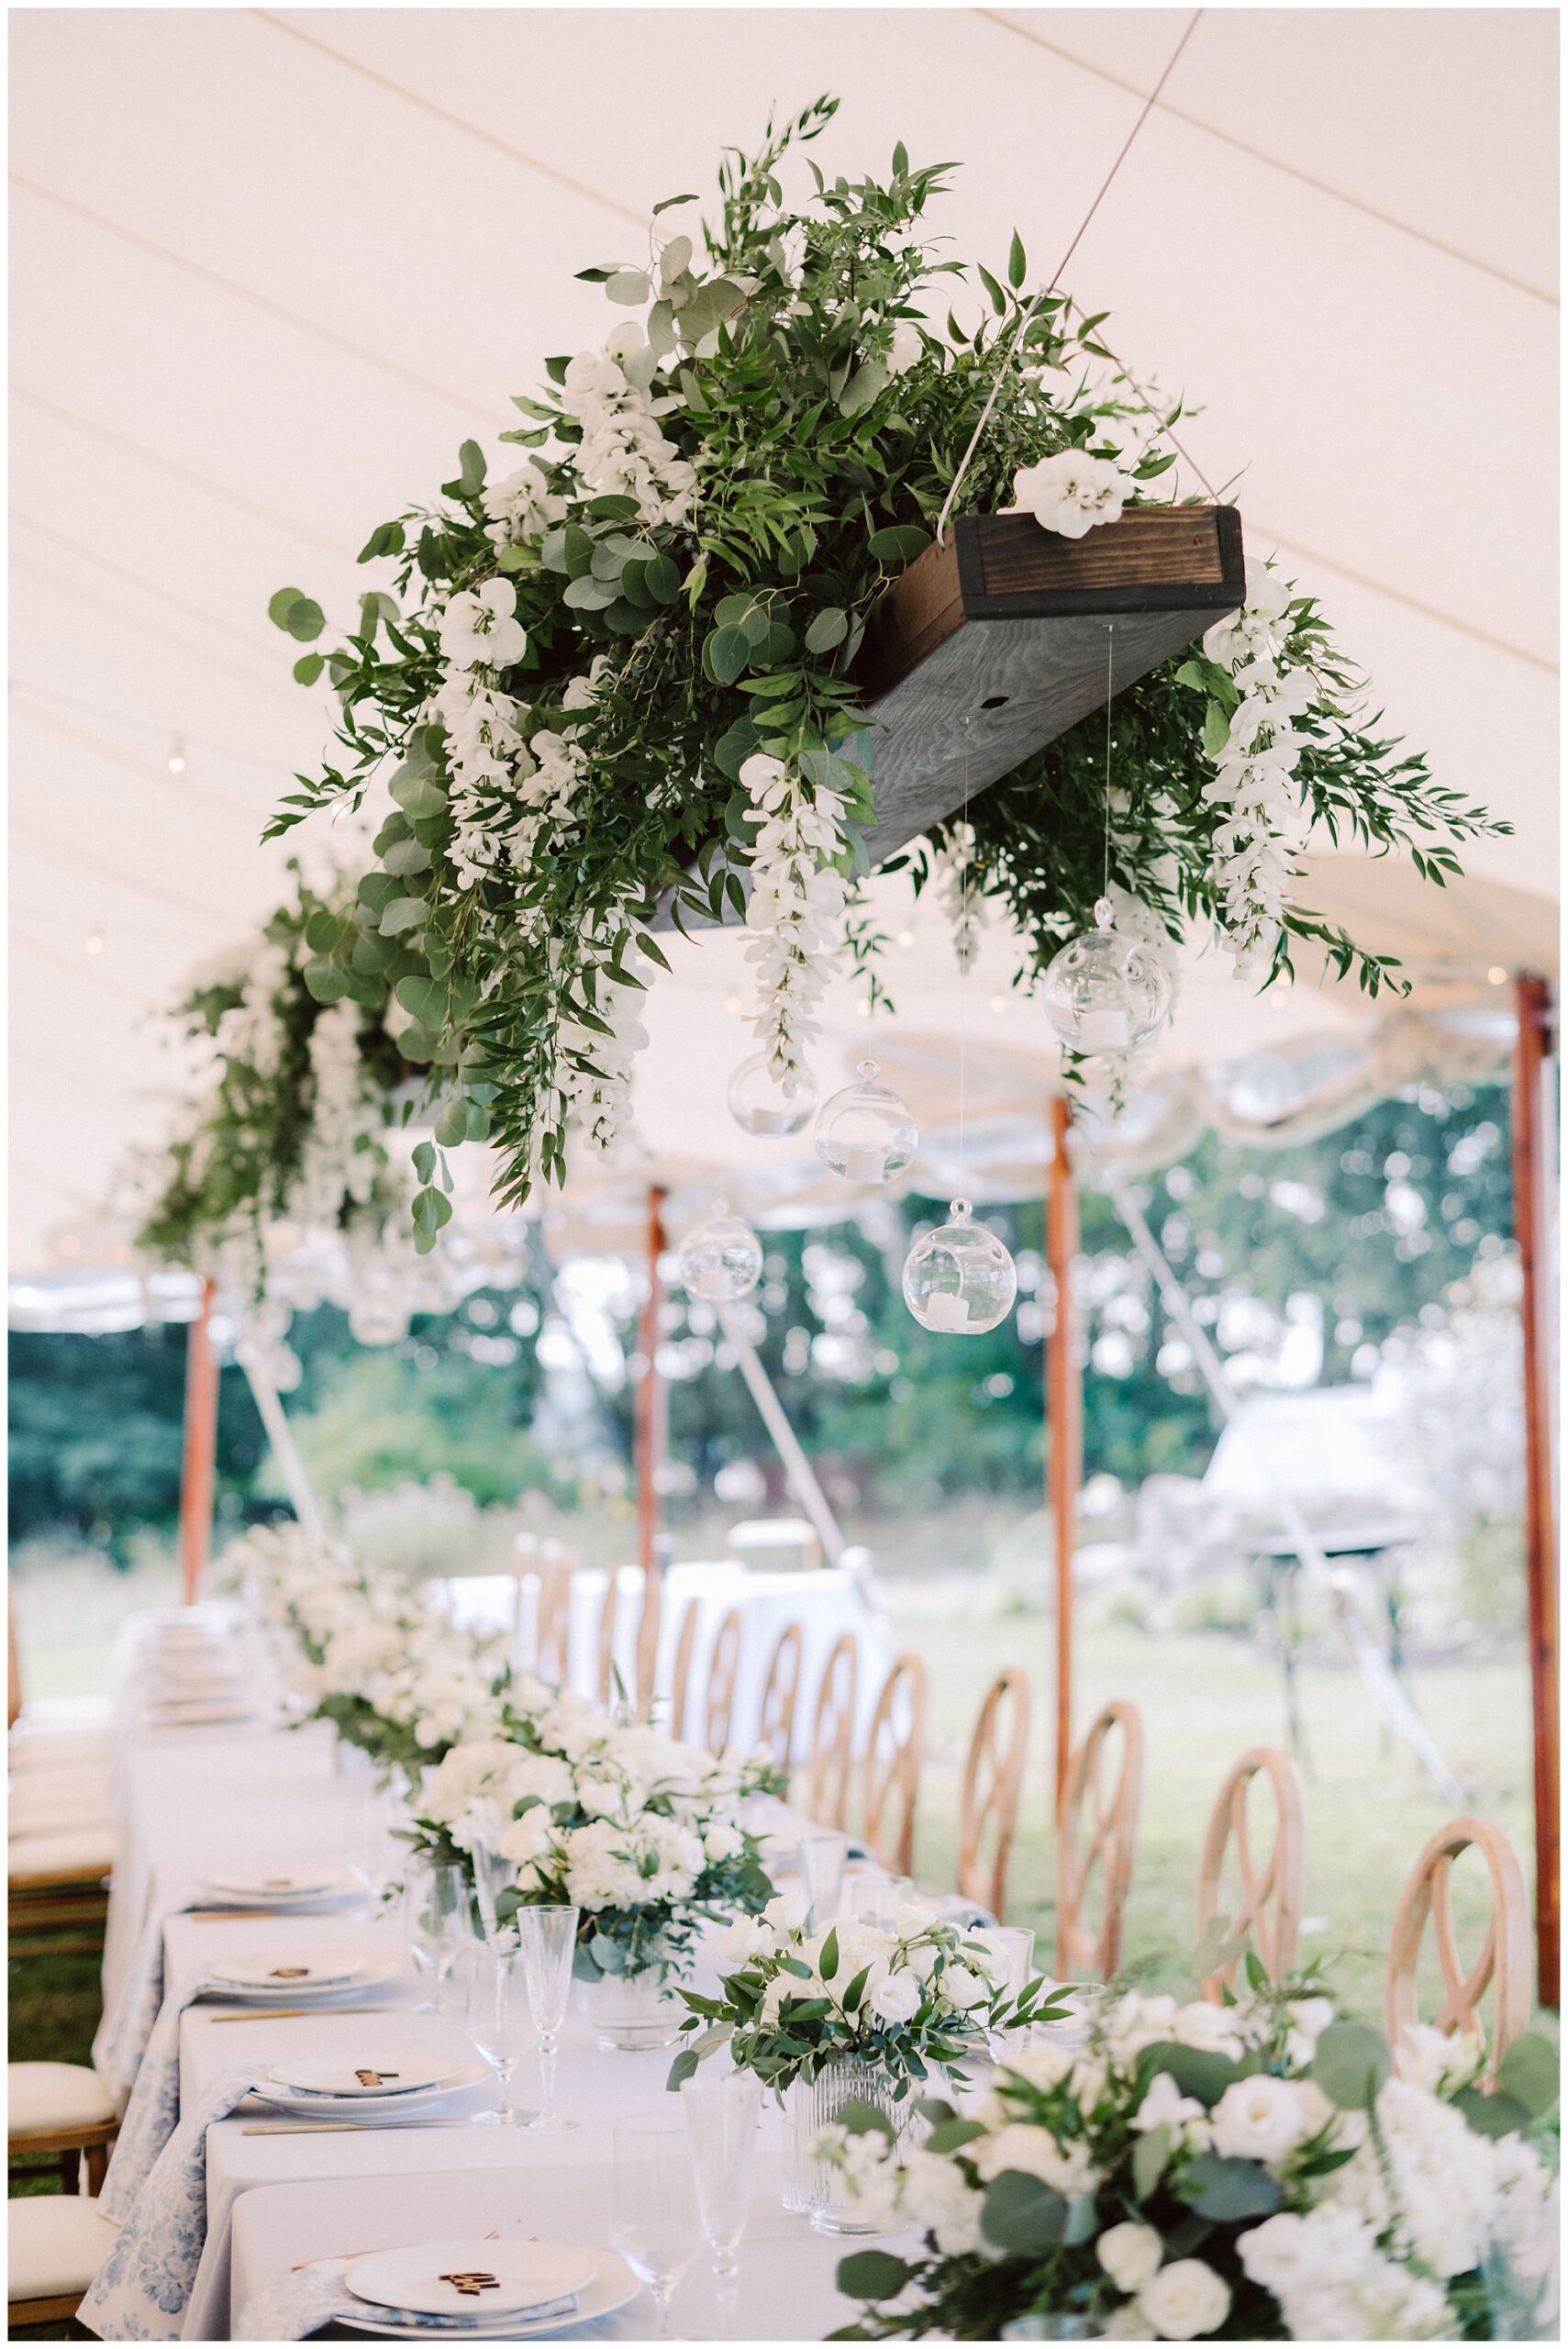 Scotland filed wedding design. Dusty blue, cream and greenery reception decor